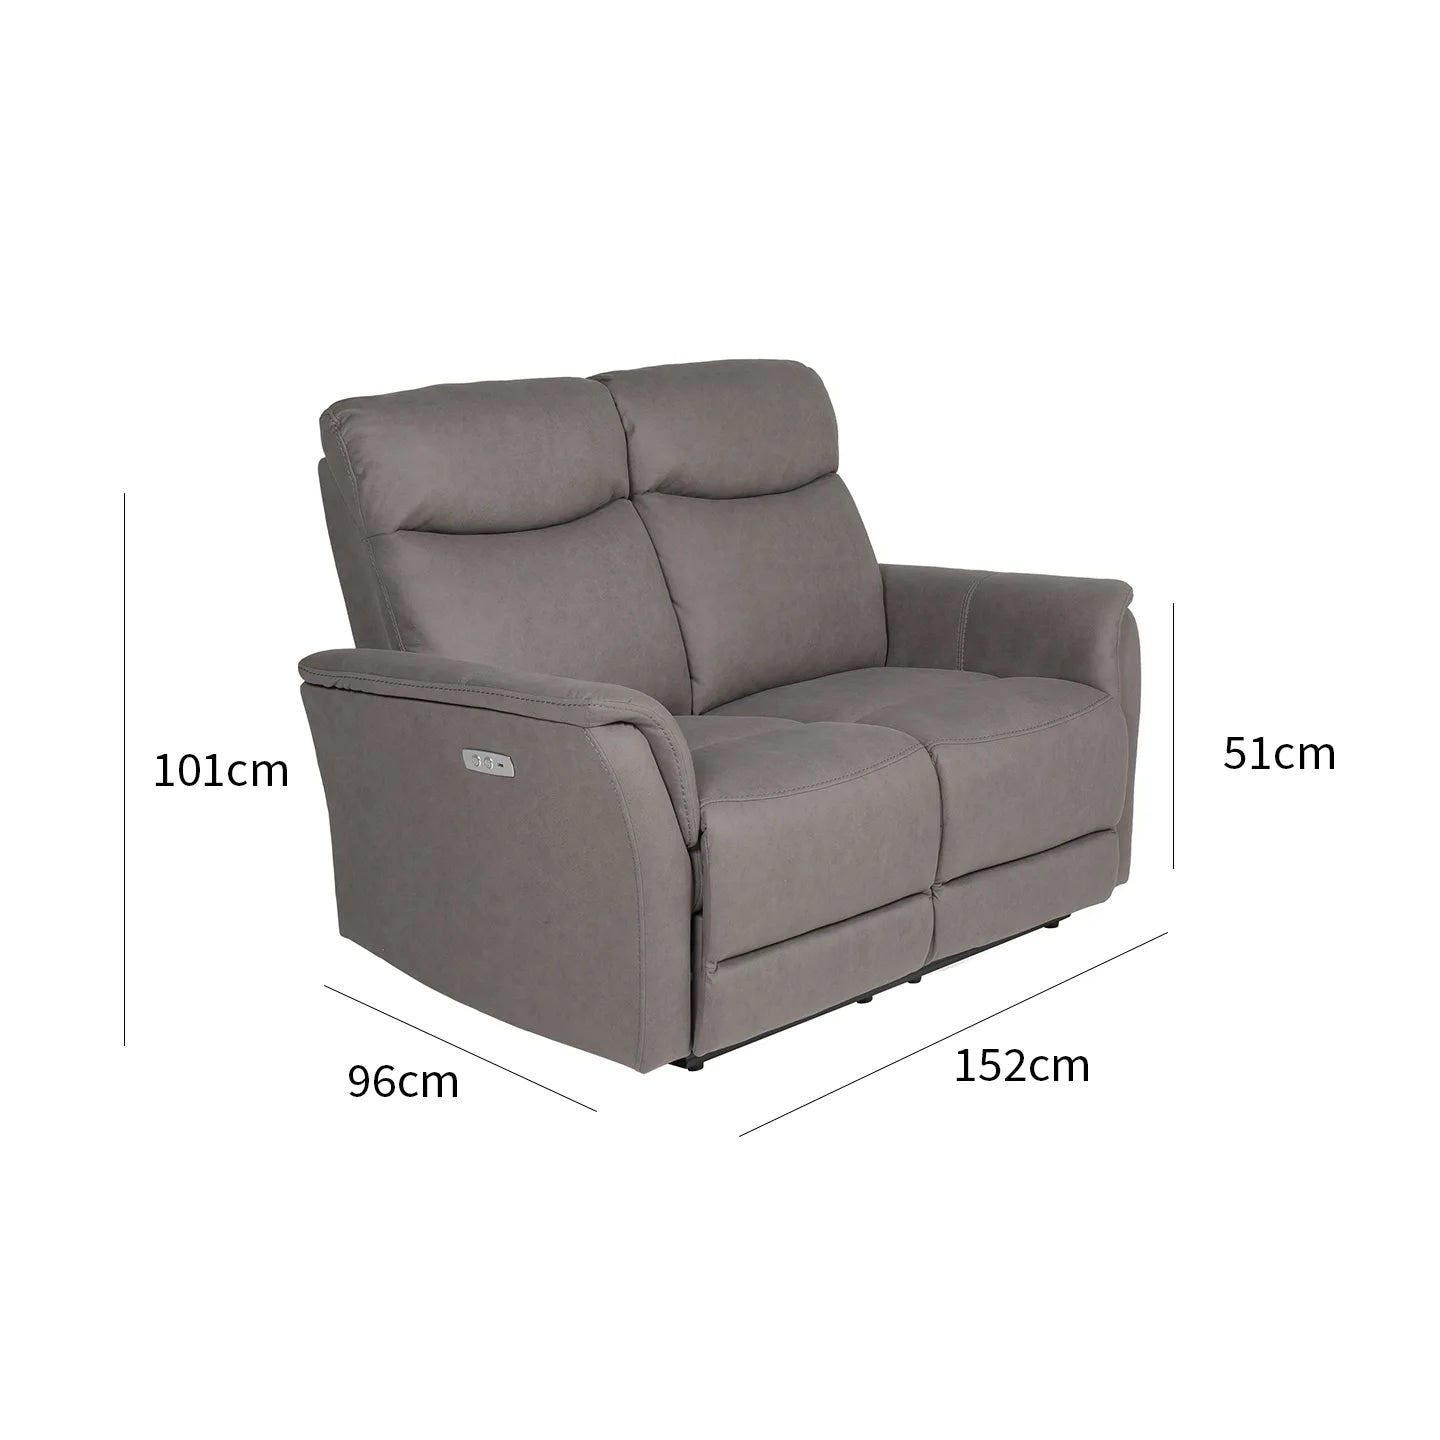 Clark Grey Fabric 2 Seater Electric Recliner Sofa